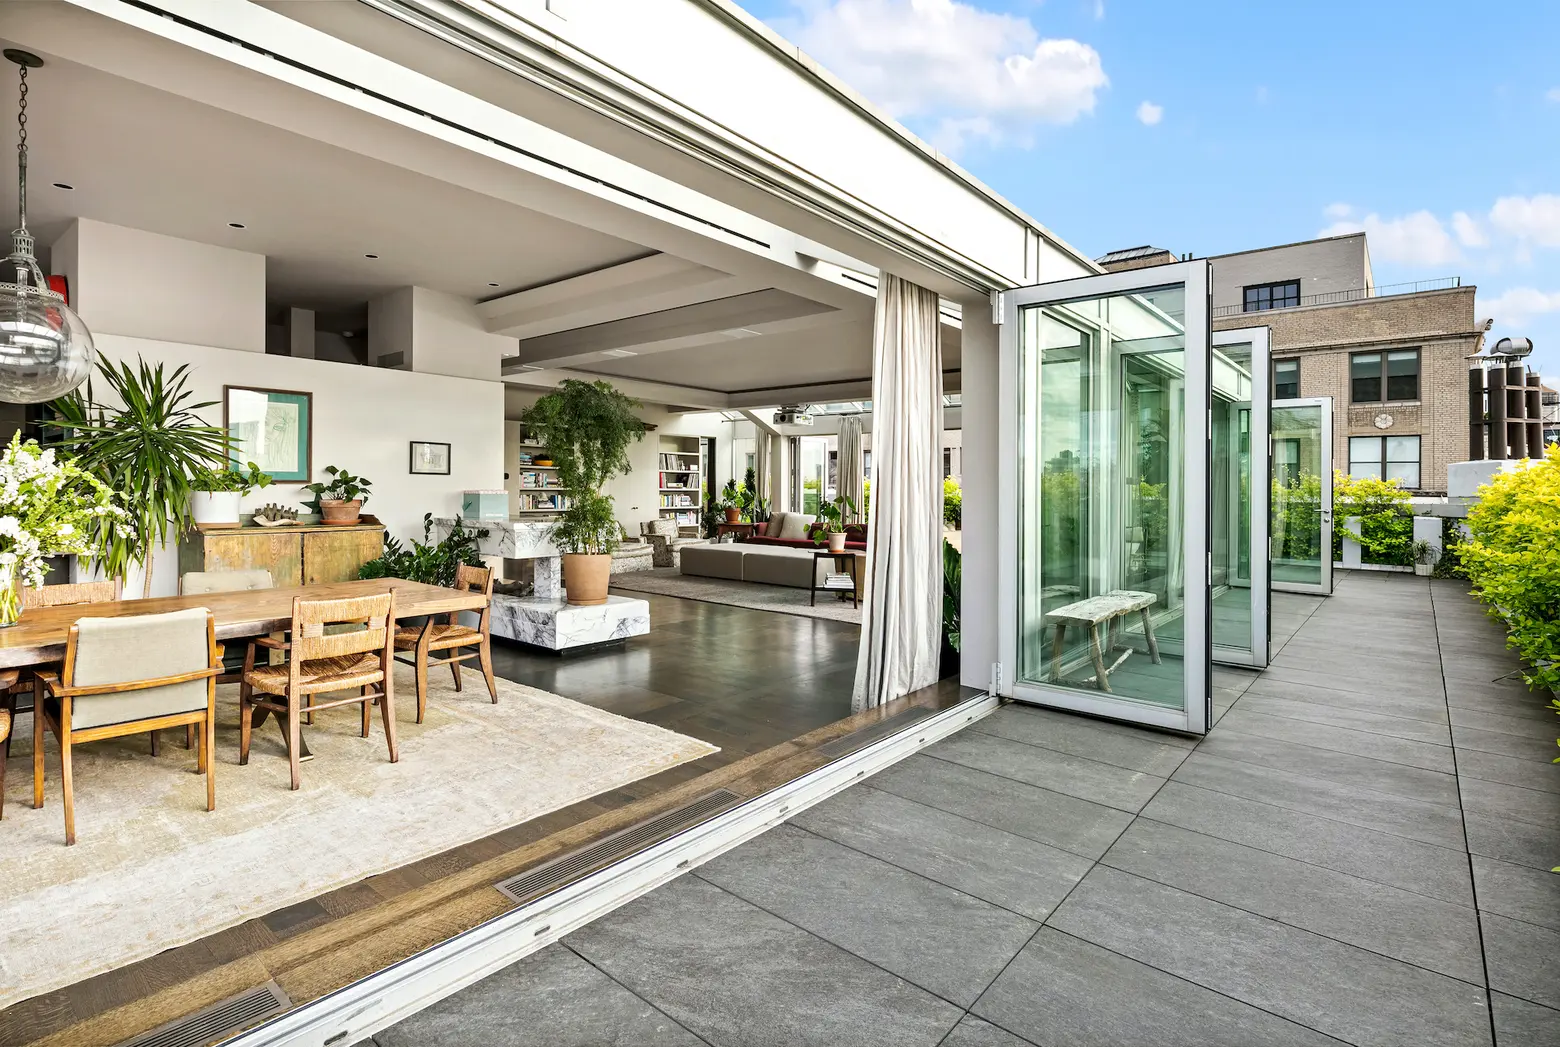 Amy Schumer lists her Upper West Side ‘secret garden’ penthouse for $15M